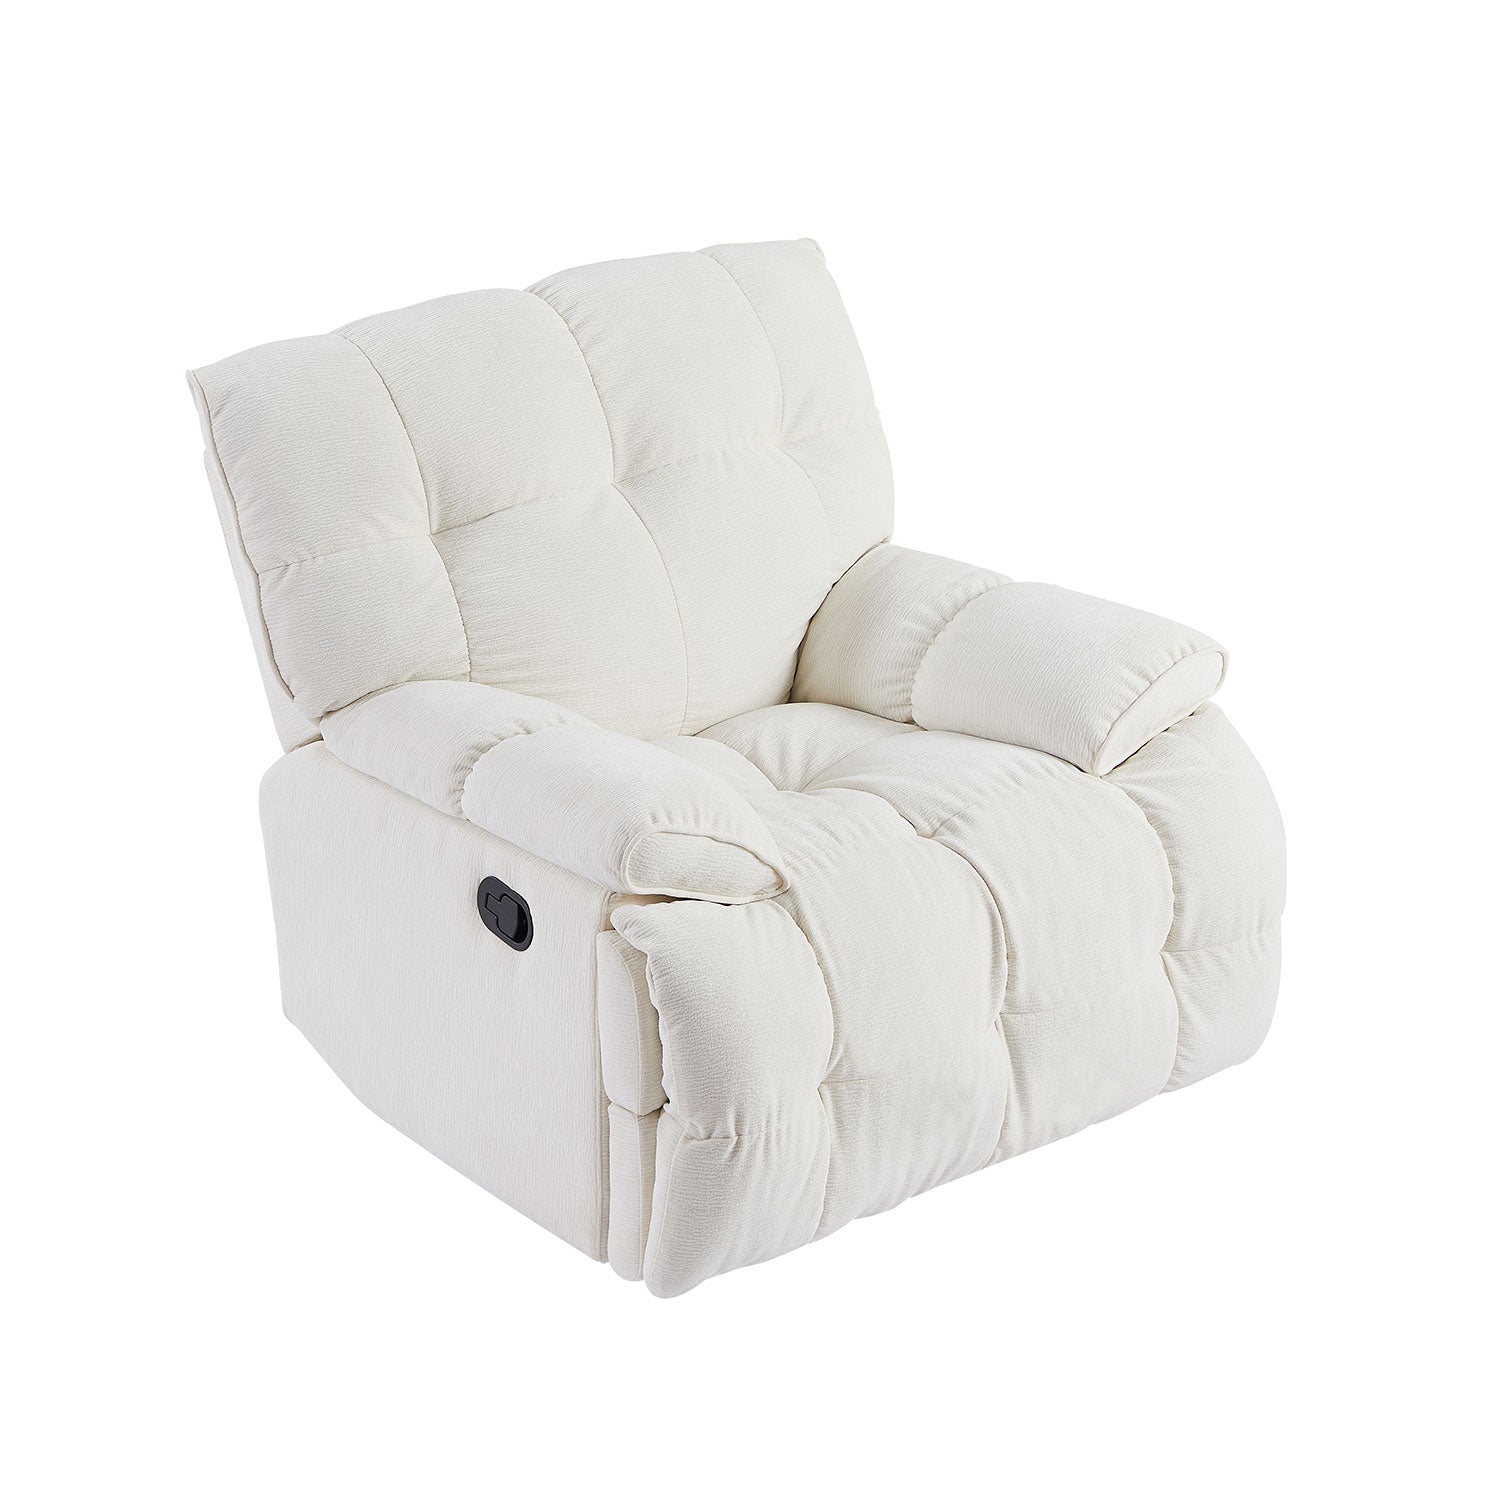 Bellemave 360 Degree Swivel Fabric Single Sofa Heavy Duty Reclining Chair Bellemave